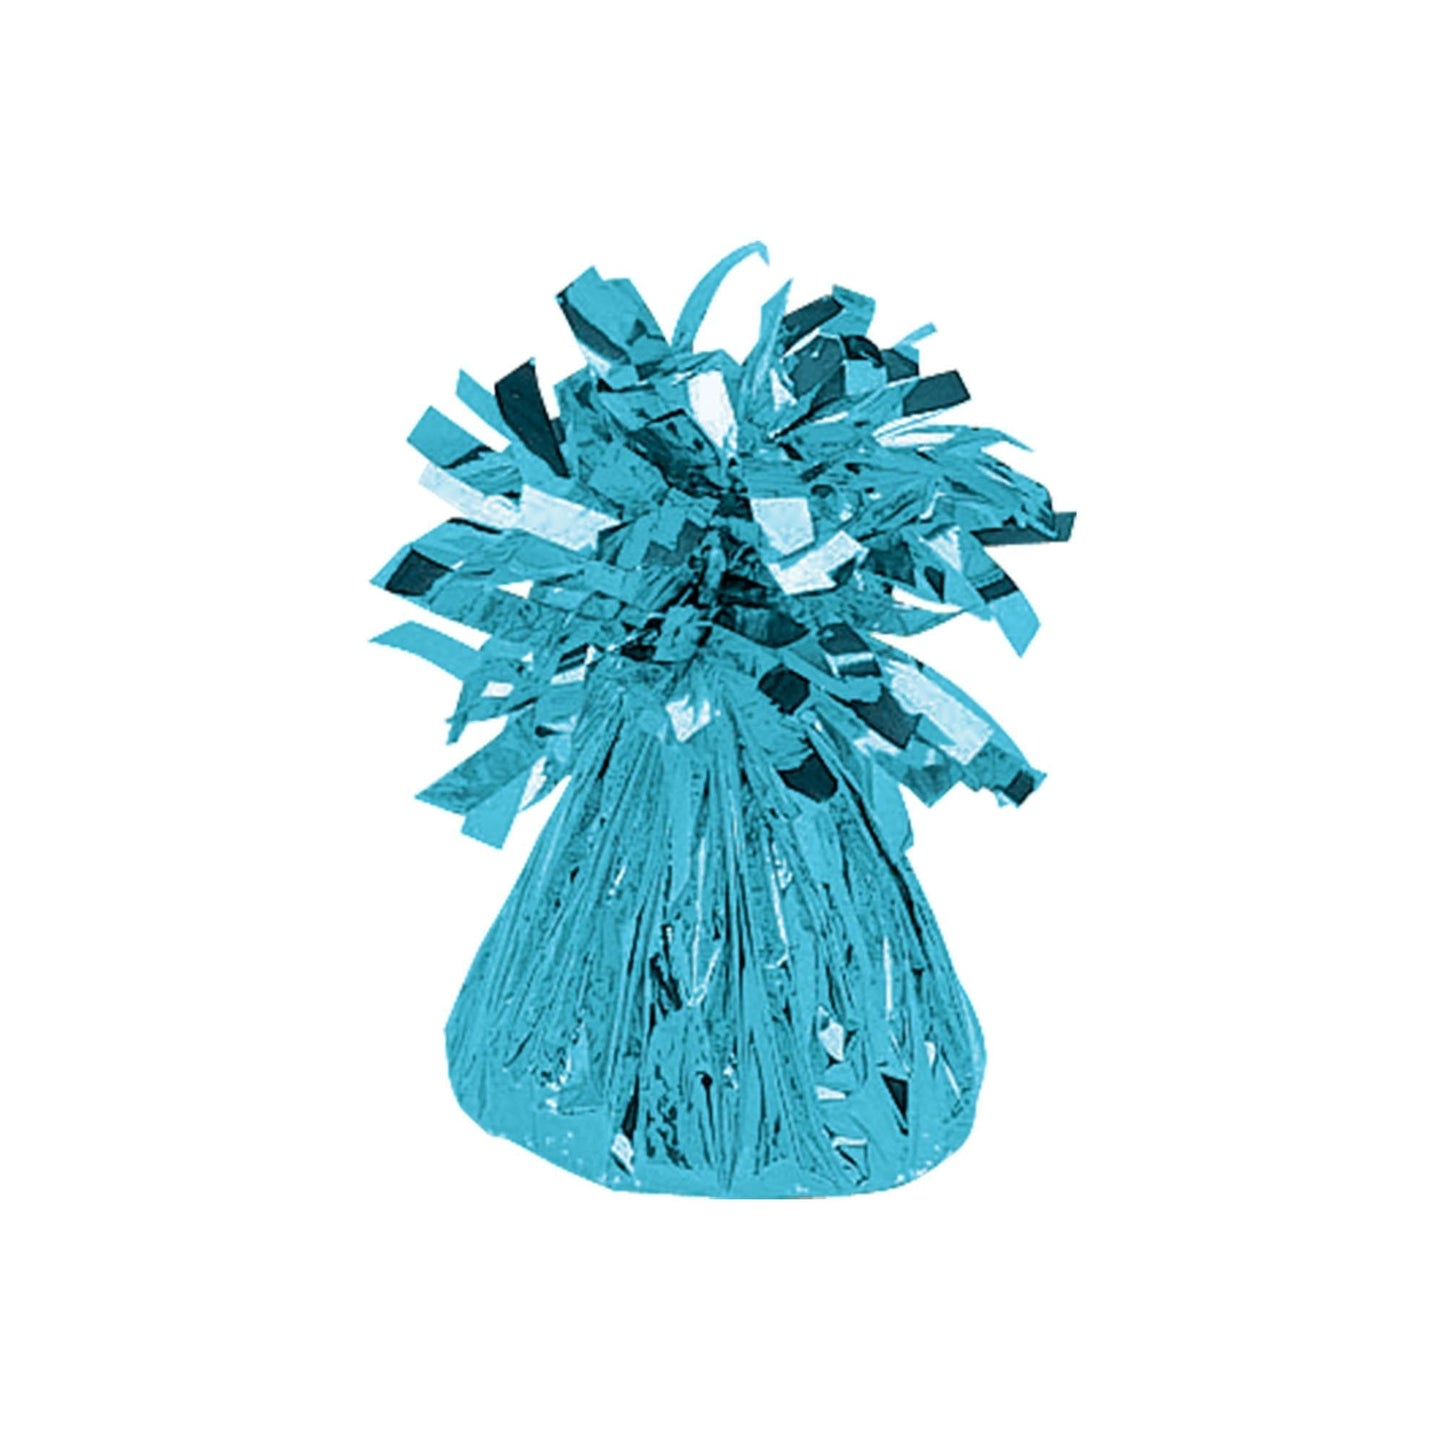 Balloon Weight Caribbean Blue Small Foil